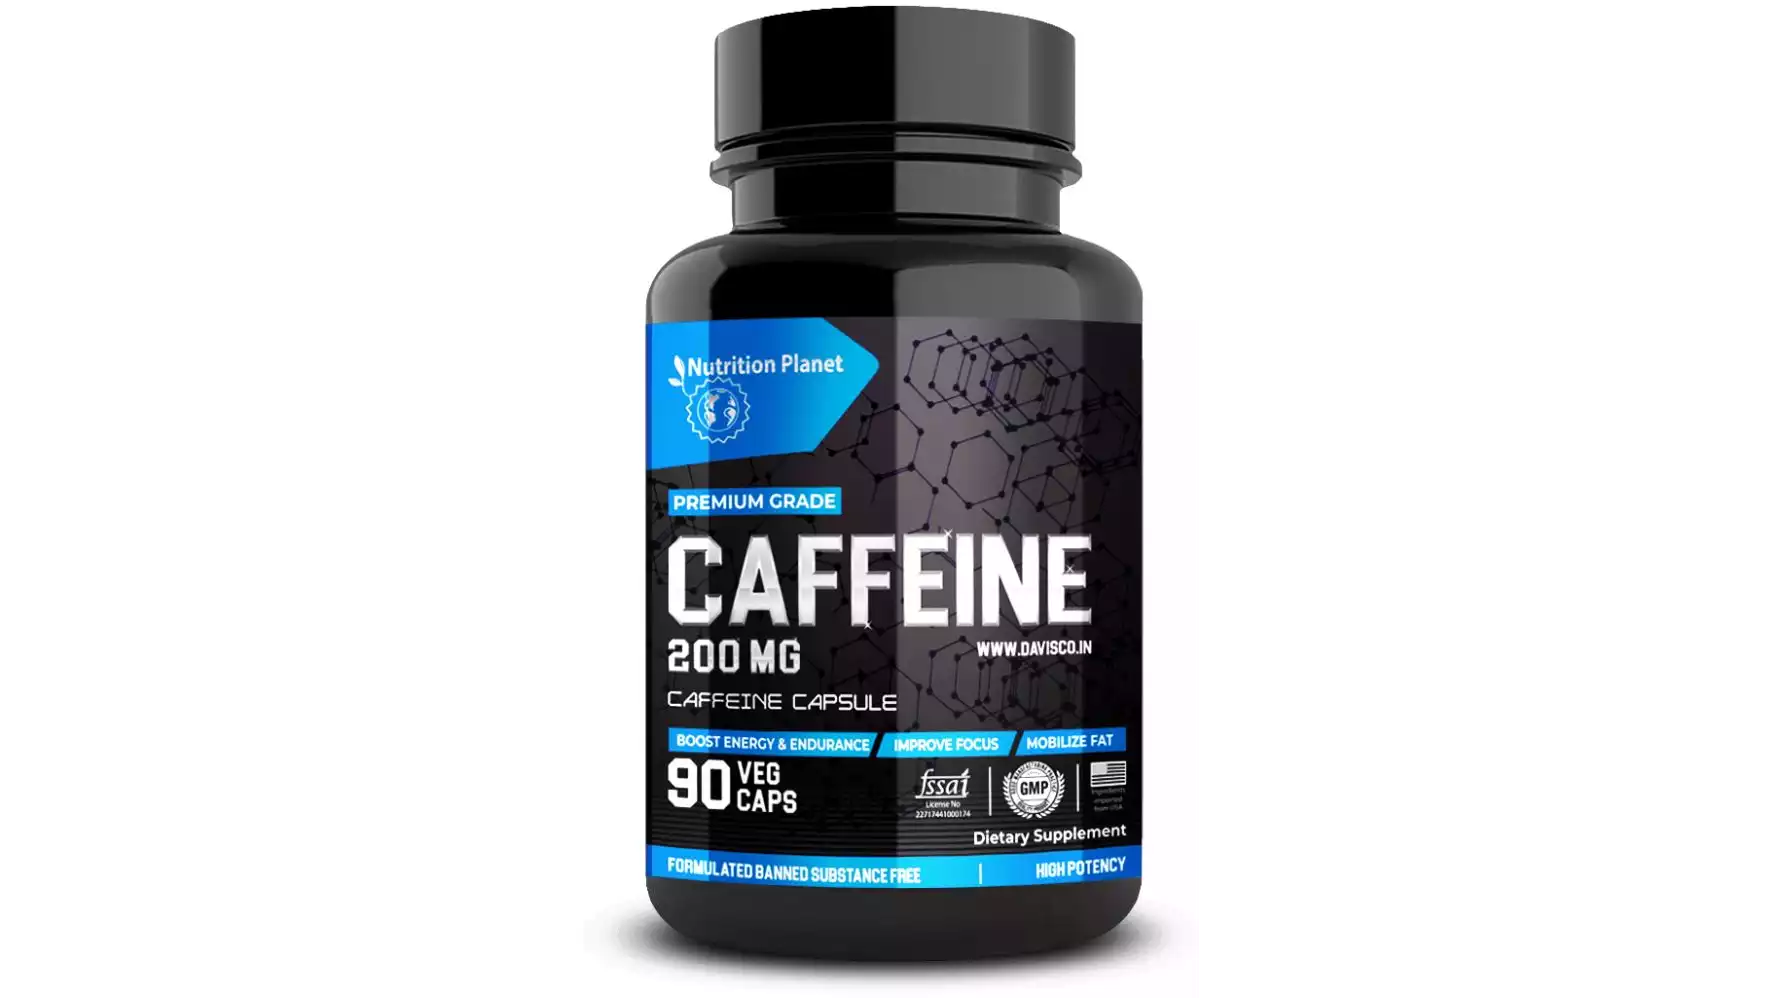 Nutrition Planet Caffeine Capsules (90caps)